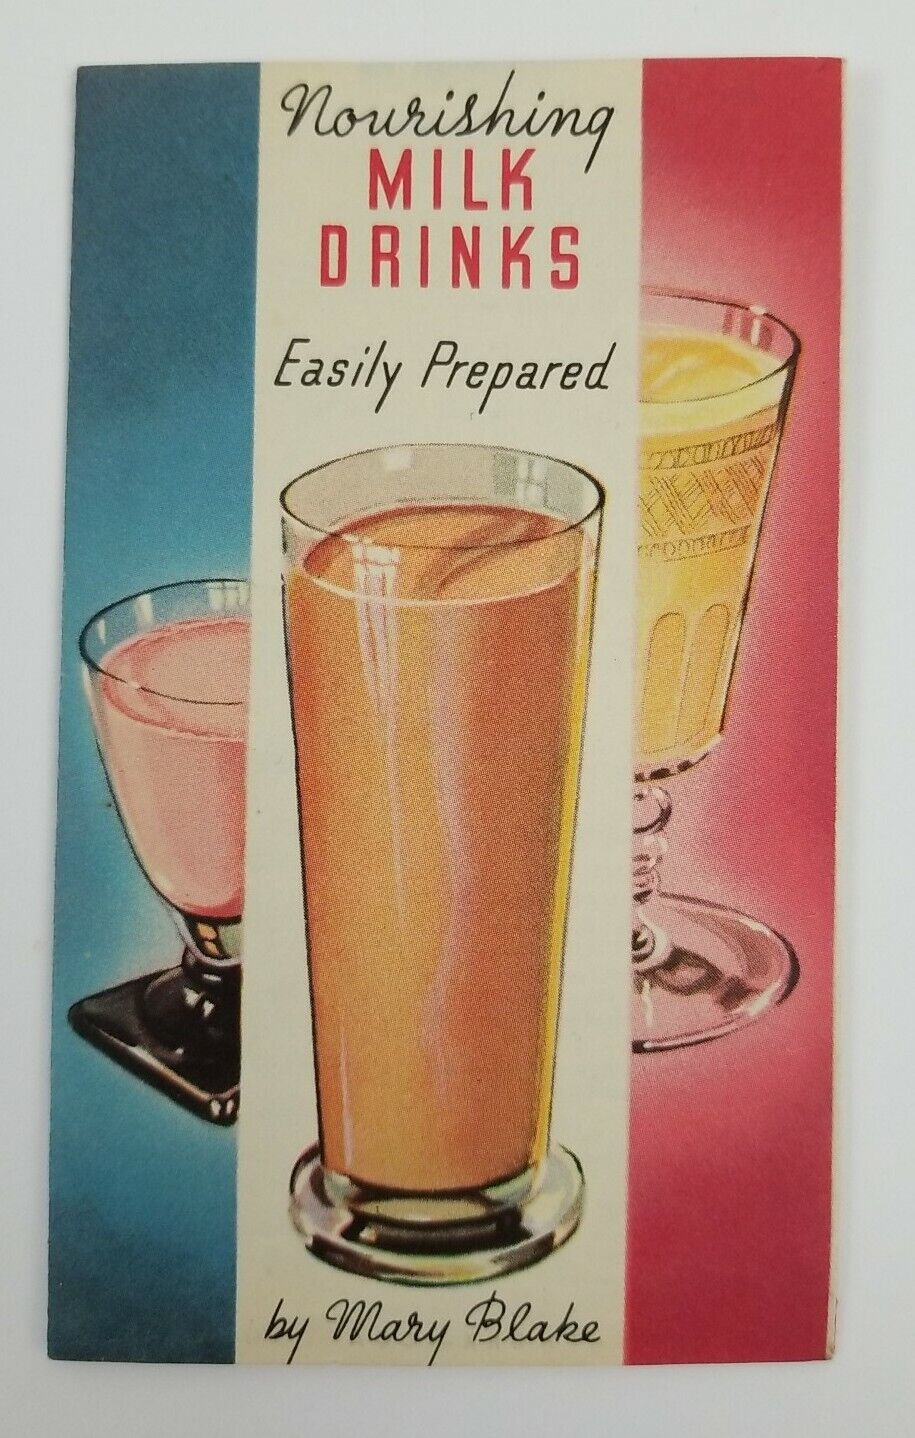 1930's Carnation Nourishing Milk Drinks Recipes - Nbc Red Network Advertisement